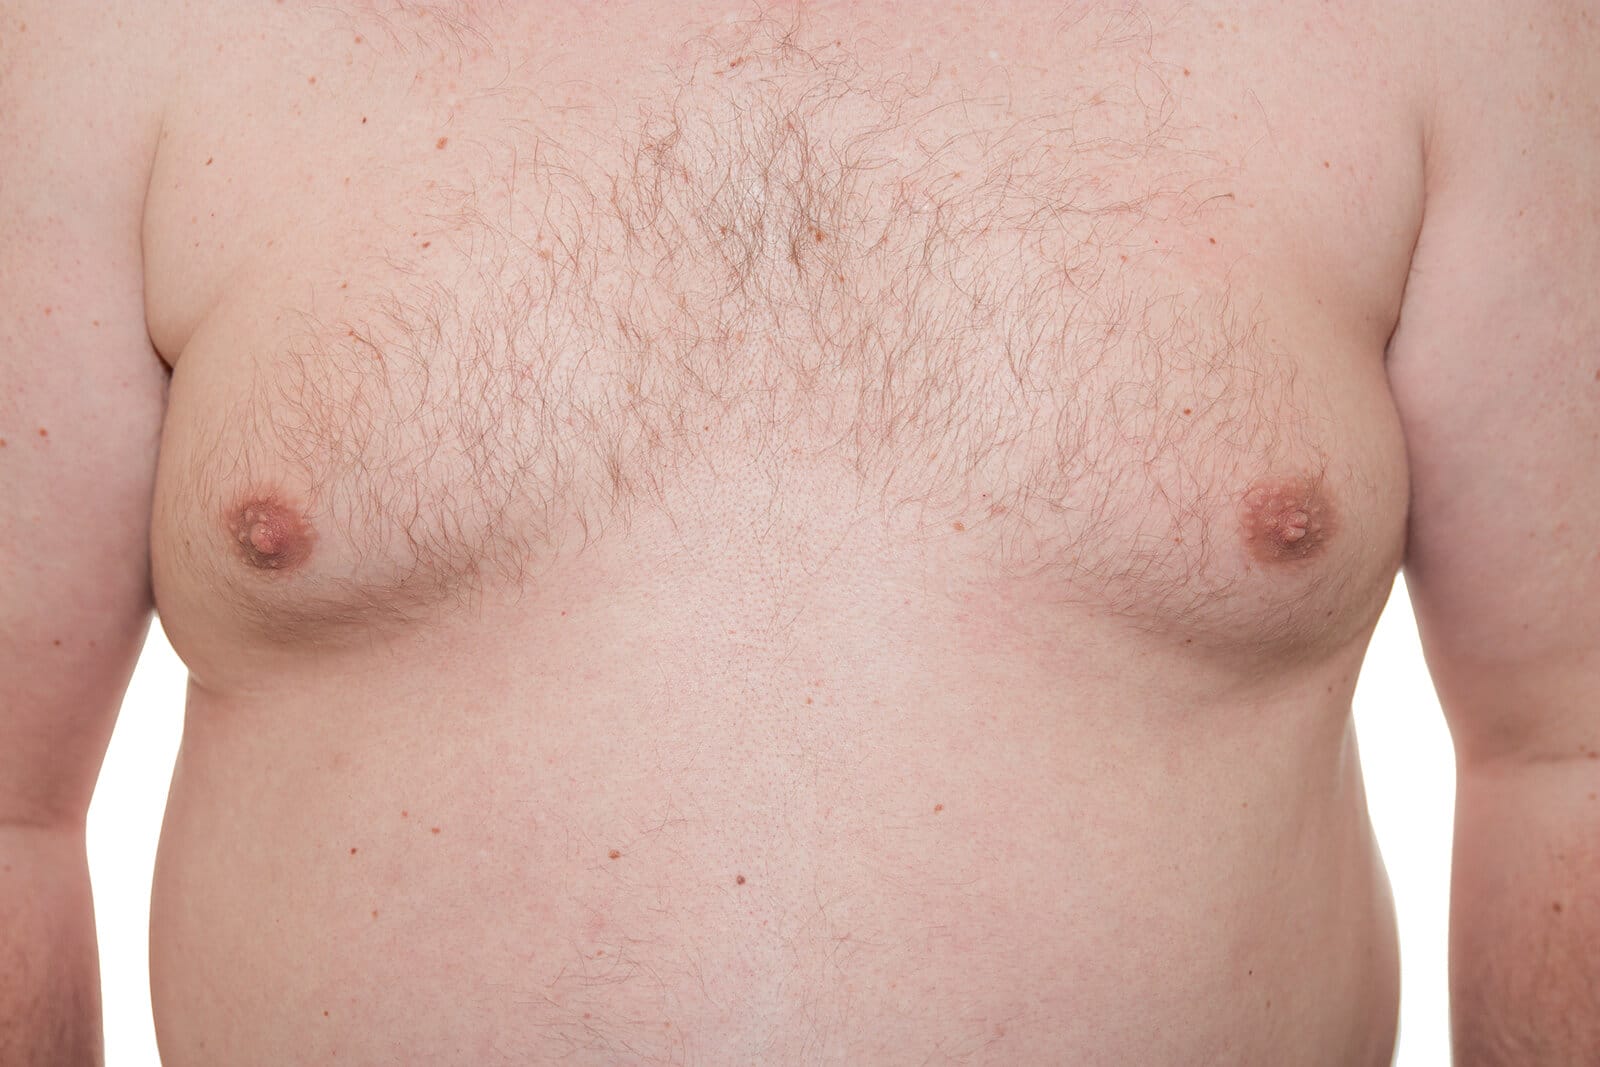 A photo of estrogen-induced man boobs.